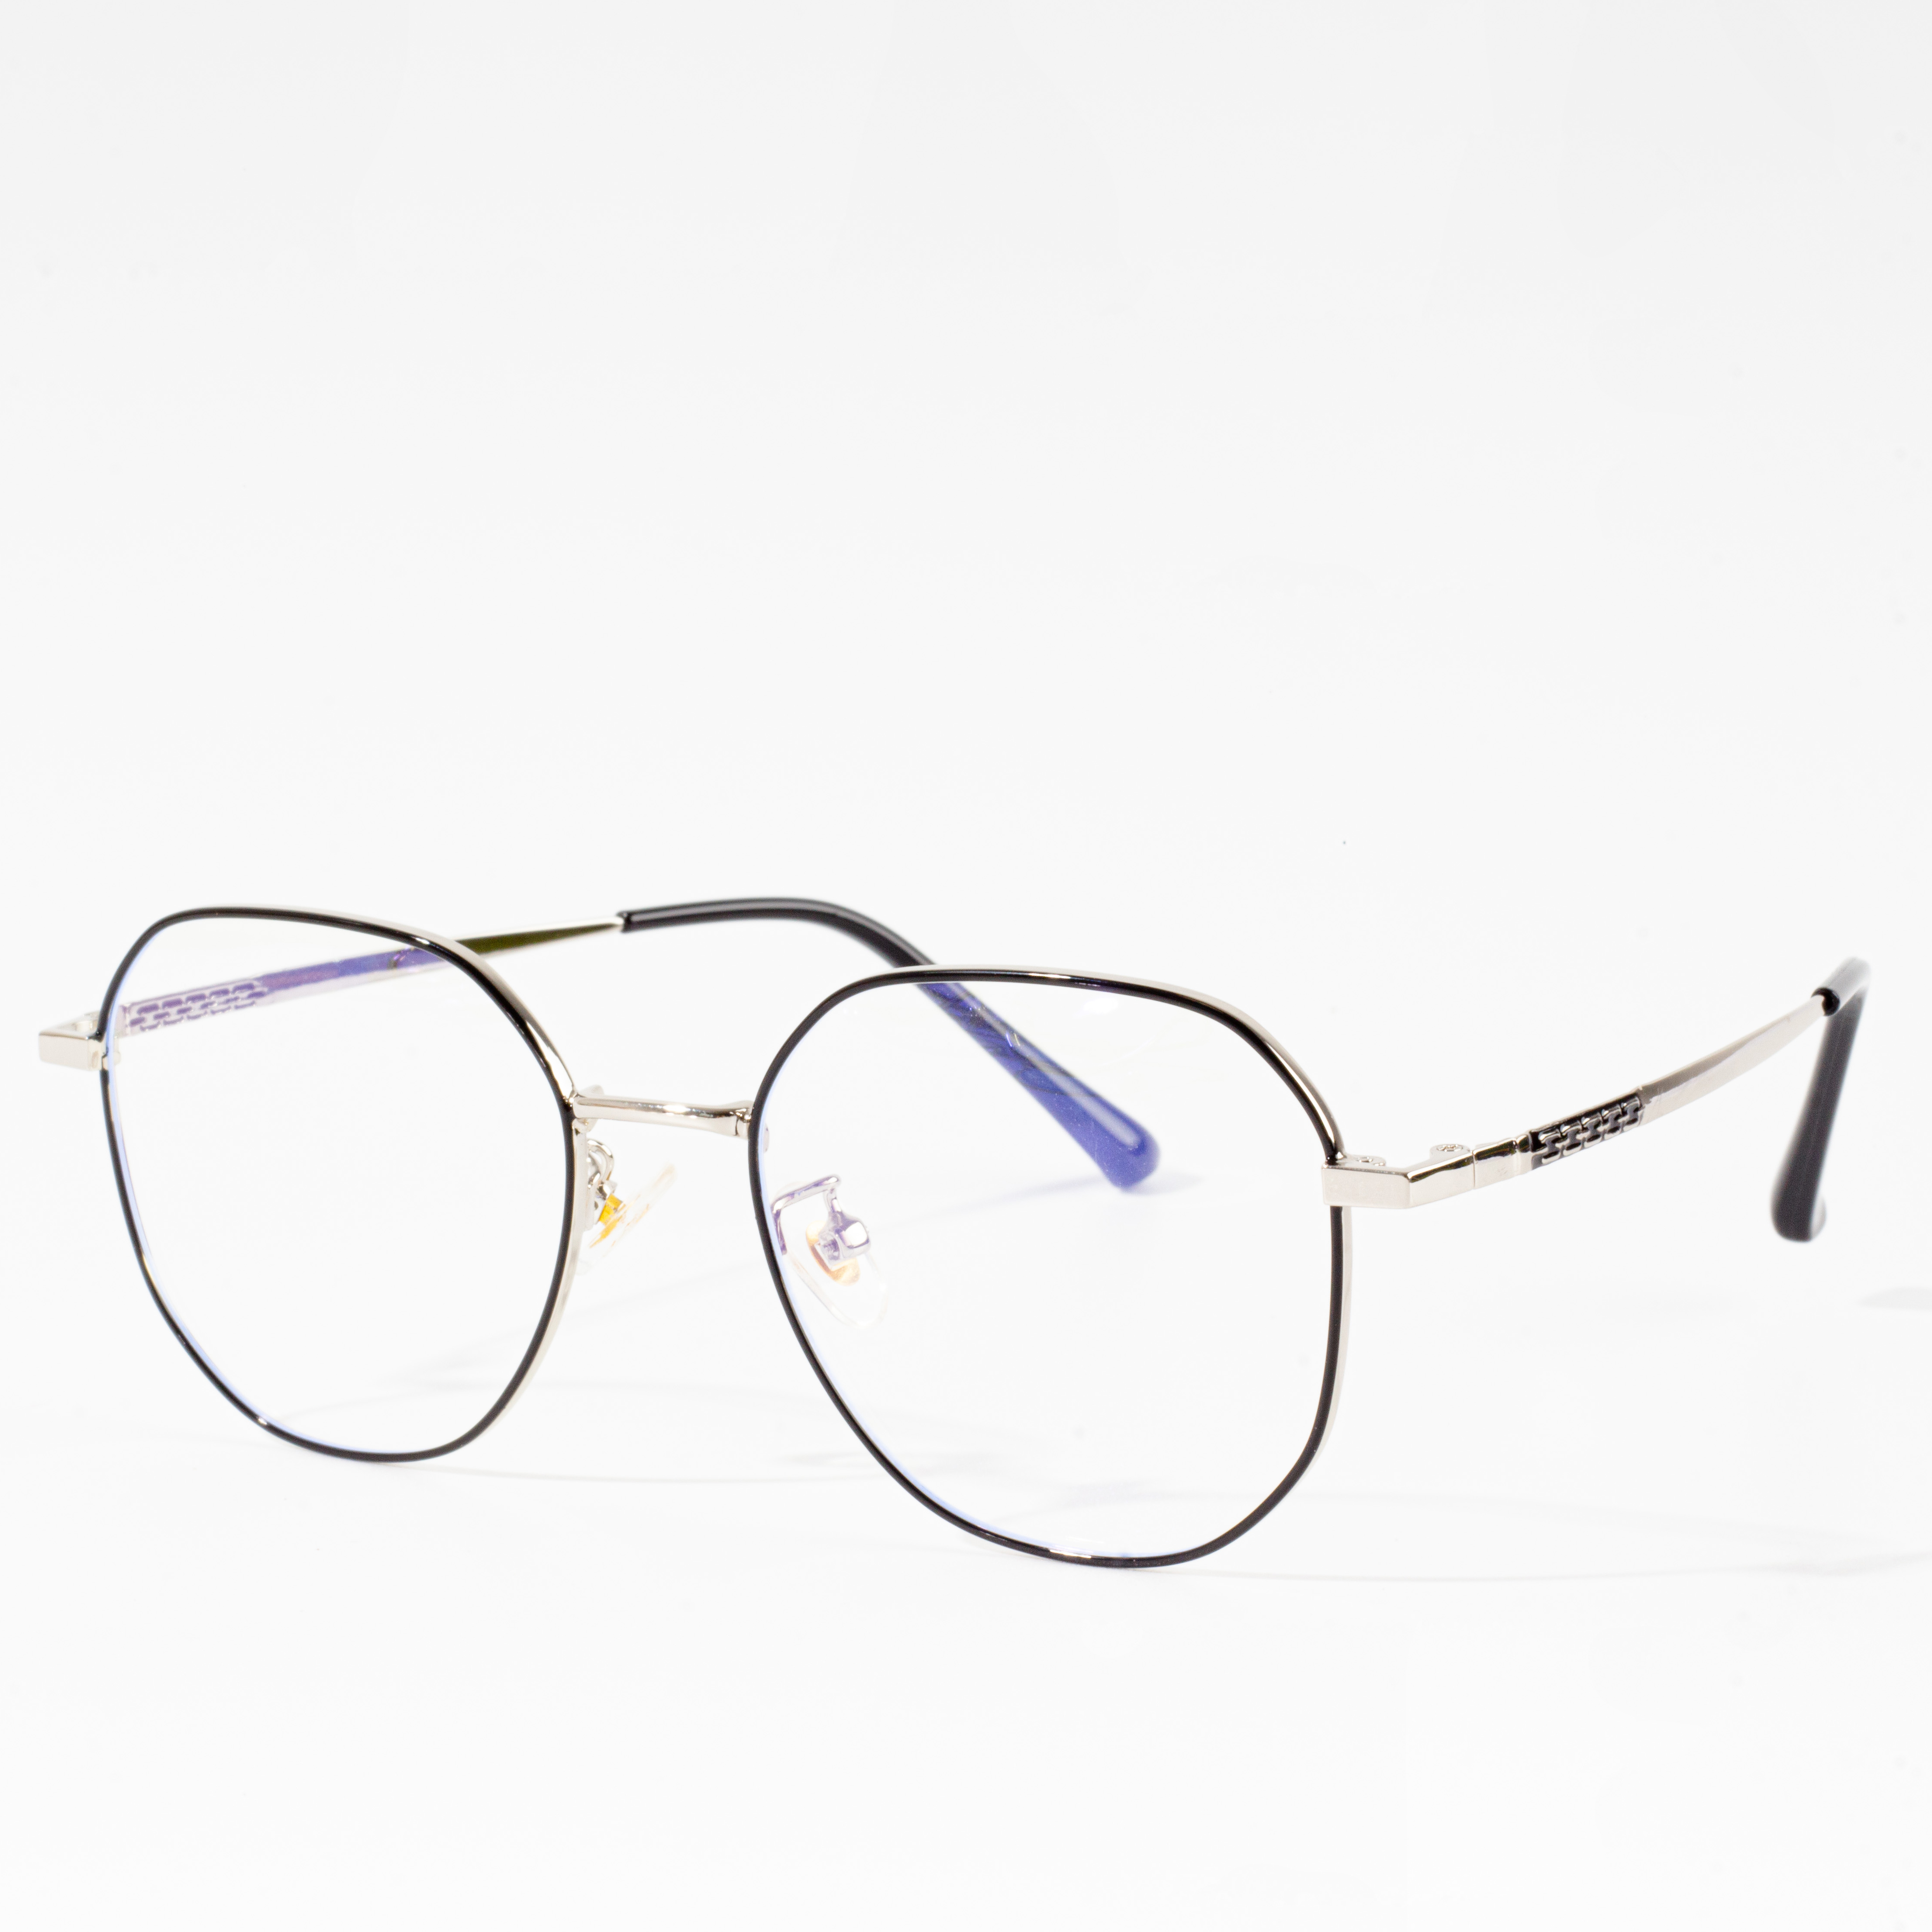 frames direct eyeglasses